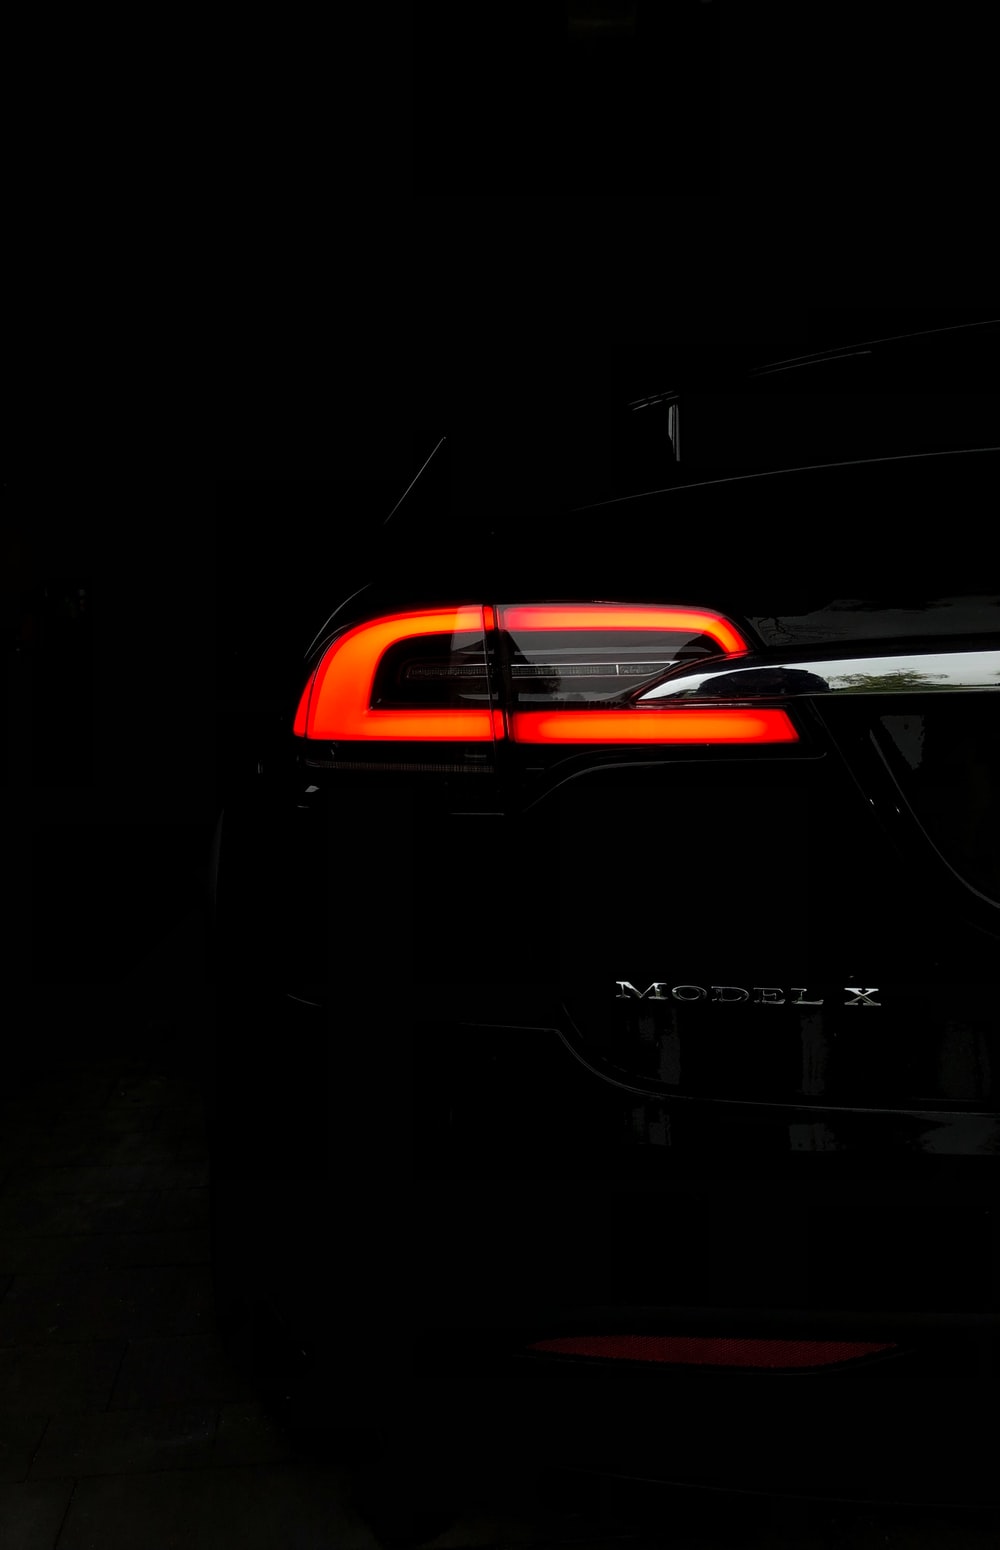 Taillight Of Model X Vehicle Photo Car Image